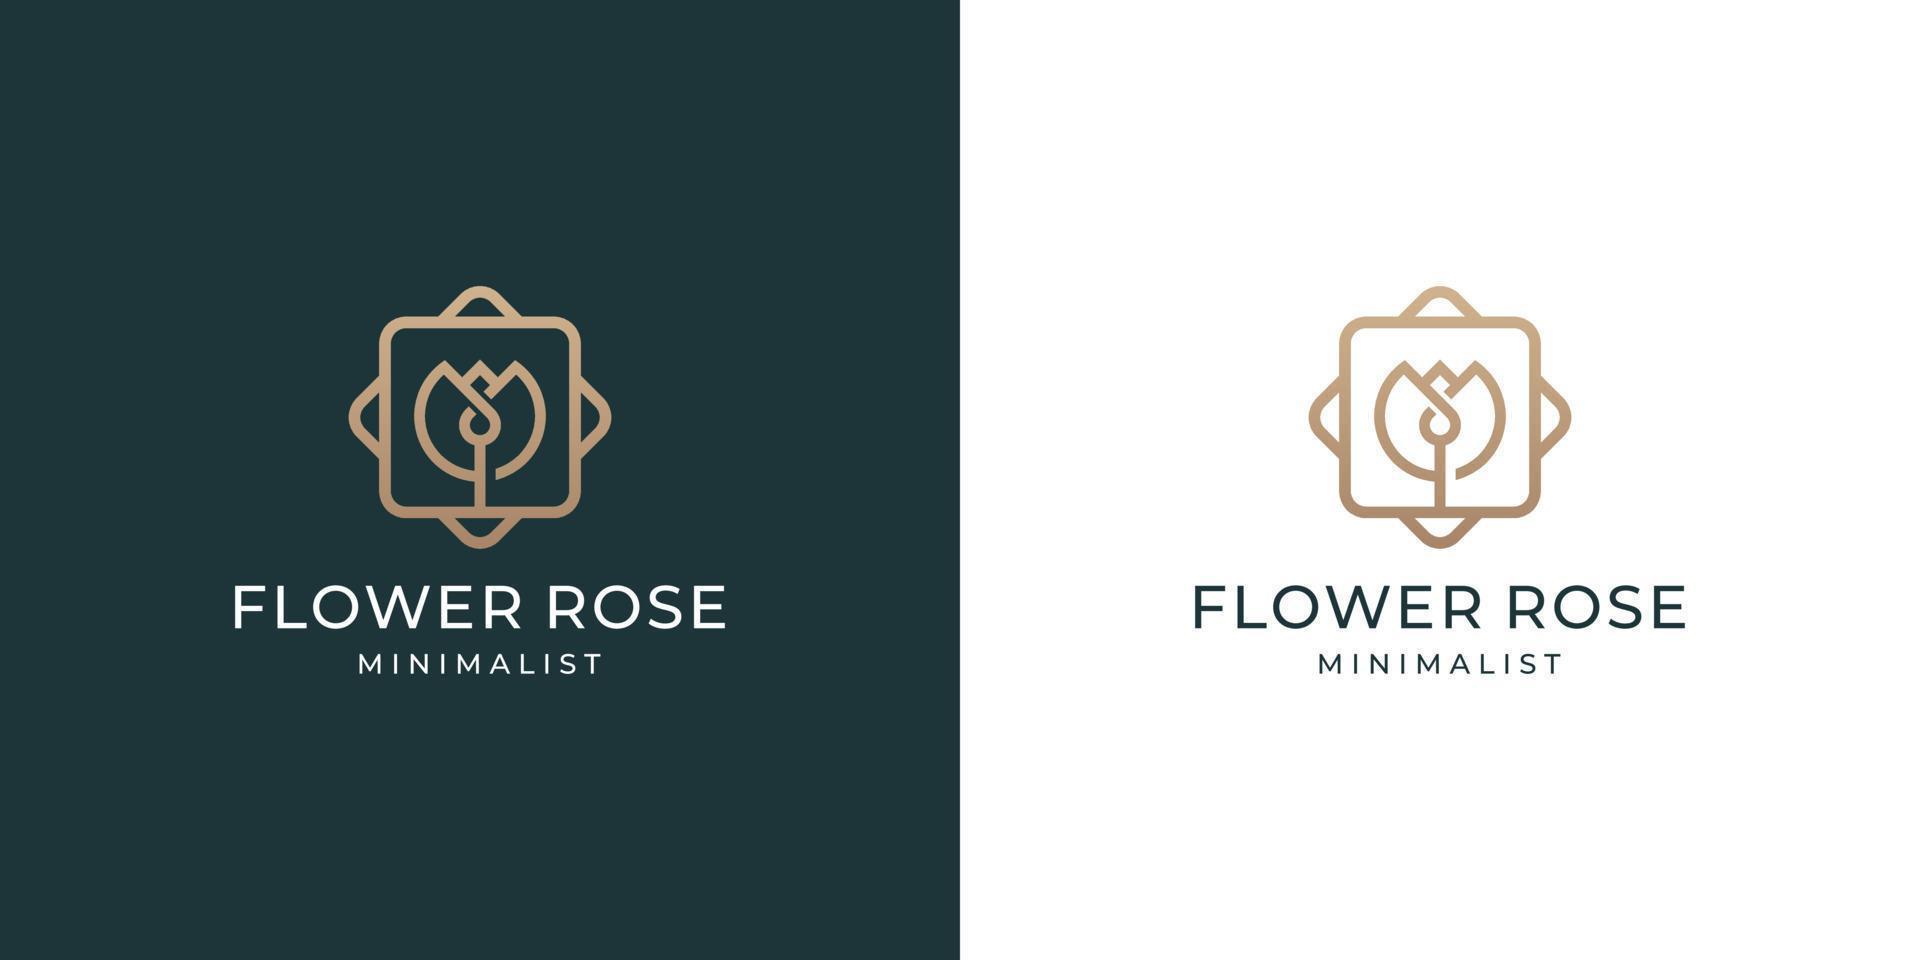 Luxury rose flower logo design with line art style vector